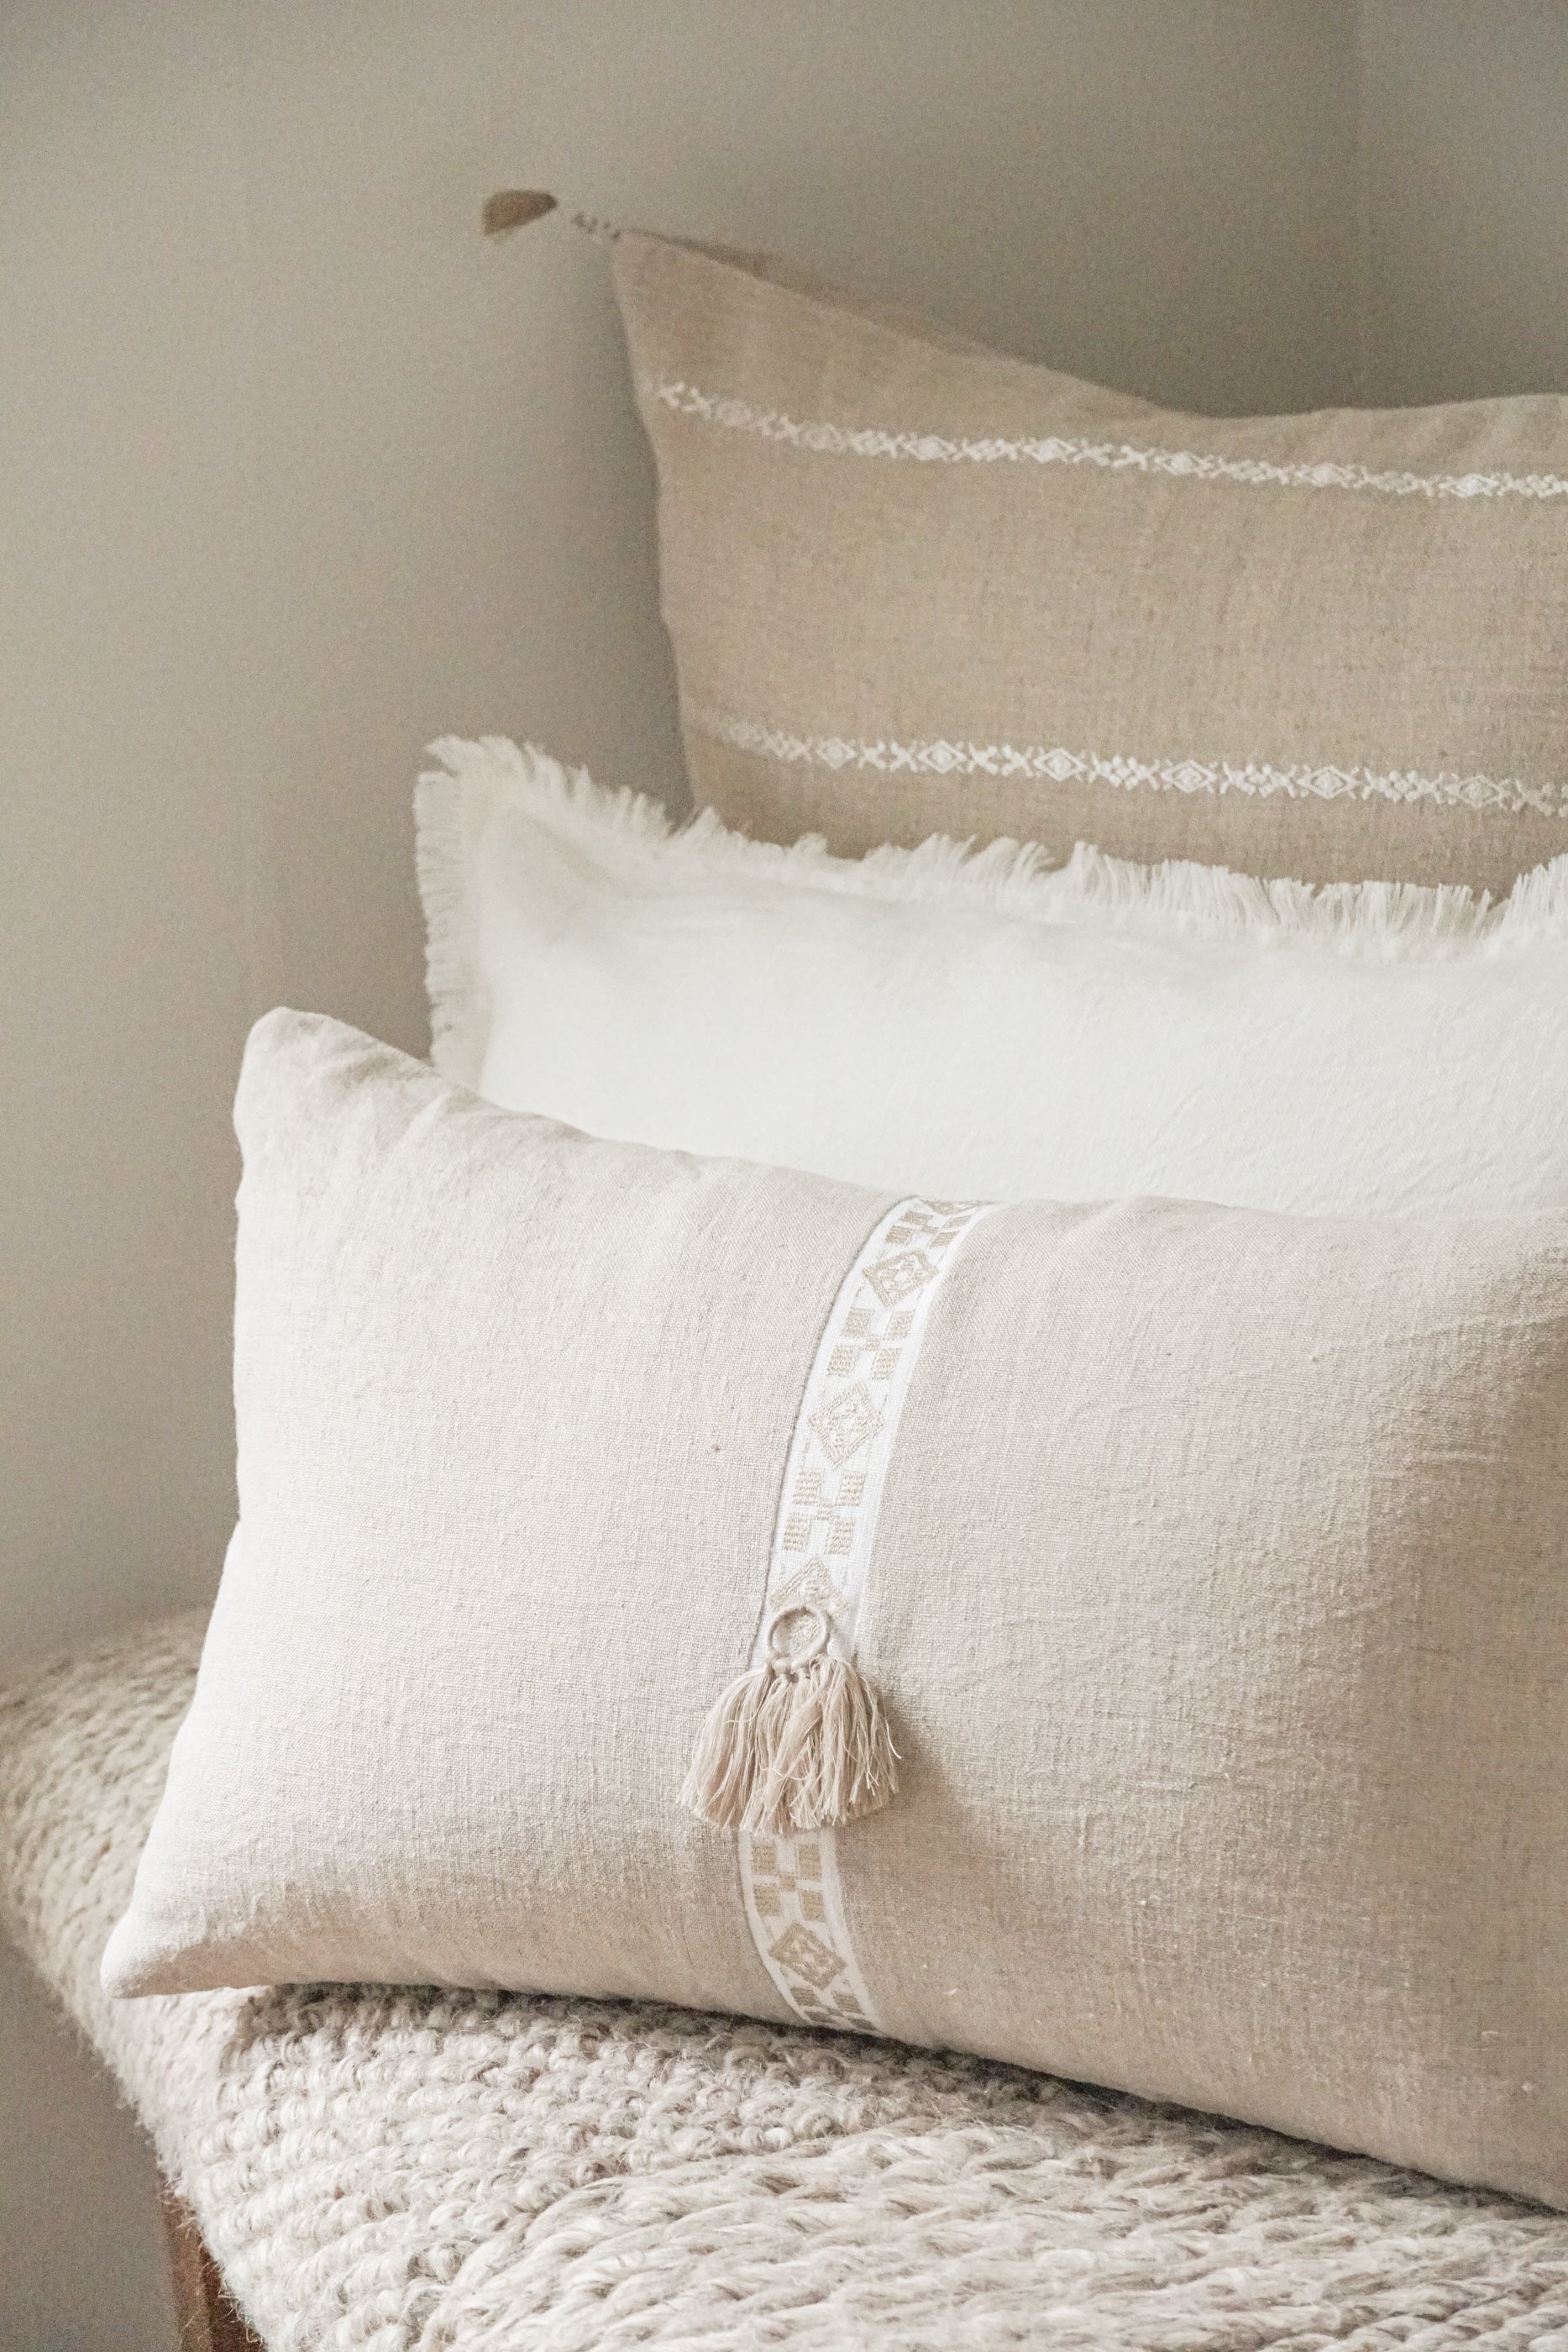 Natural Geo Trim So Soft Beige Linen Pillow by Anaya